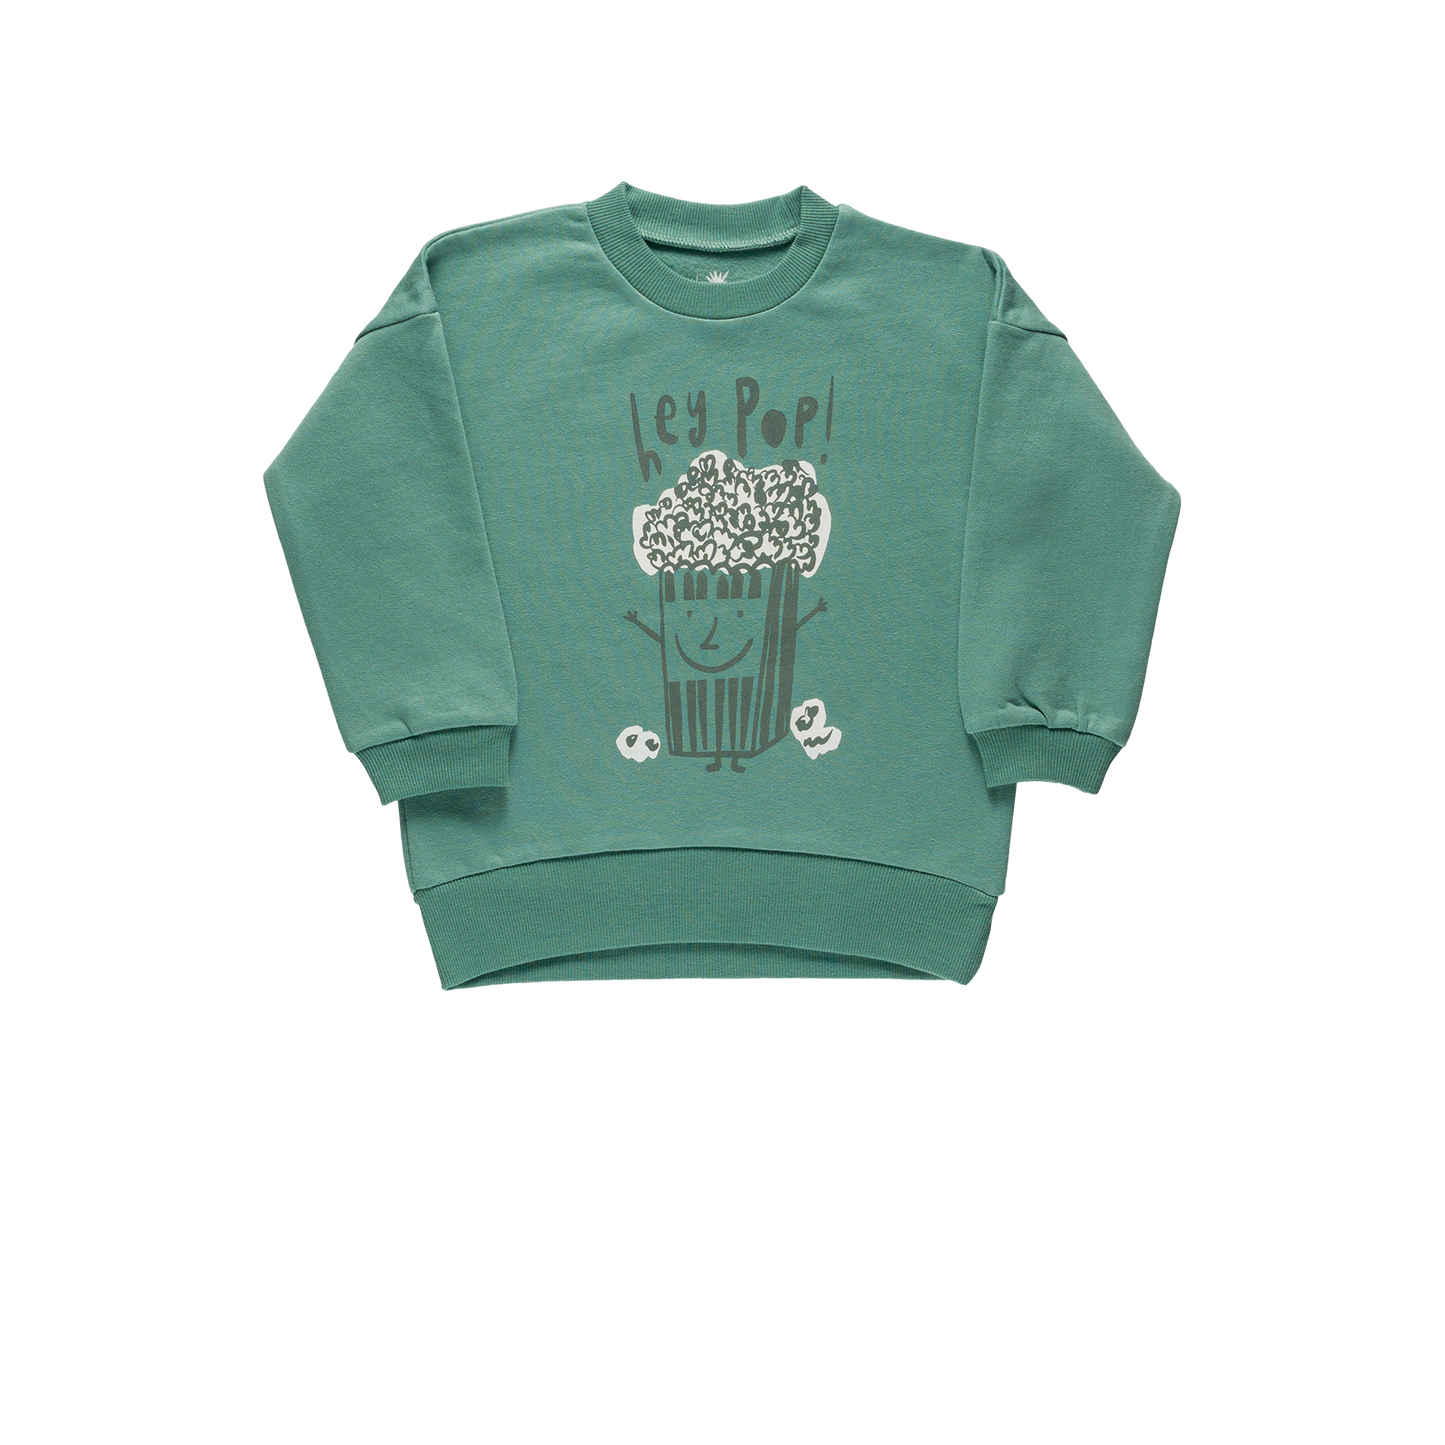 Organic cotton Grow Sweatshirt - Aged 6m to 5 Yrs- Colored  Green